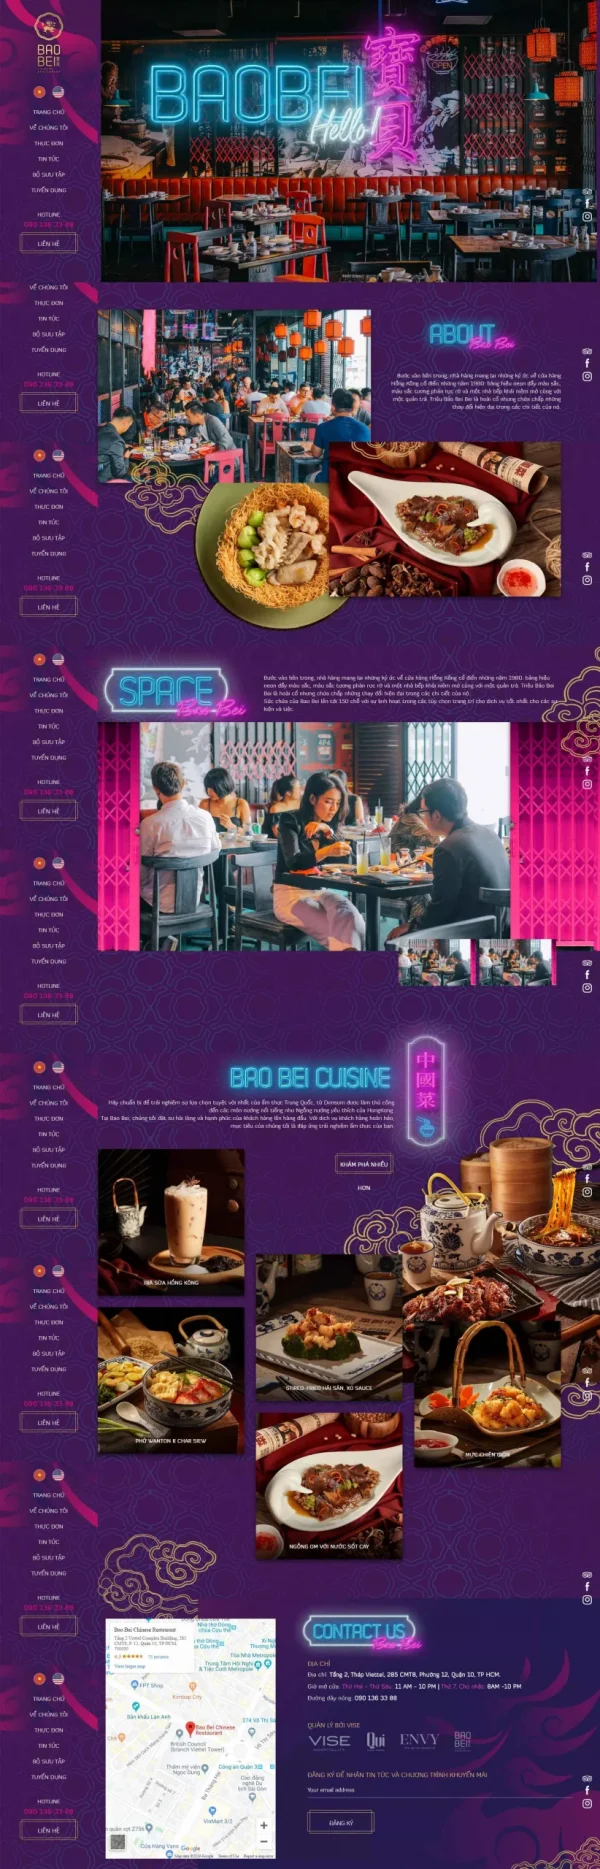 Mẫu giao diện website nhà hàng Baobei